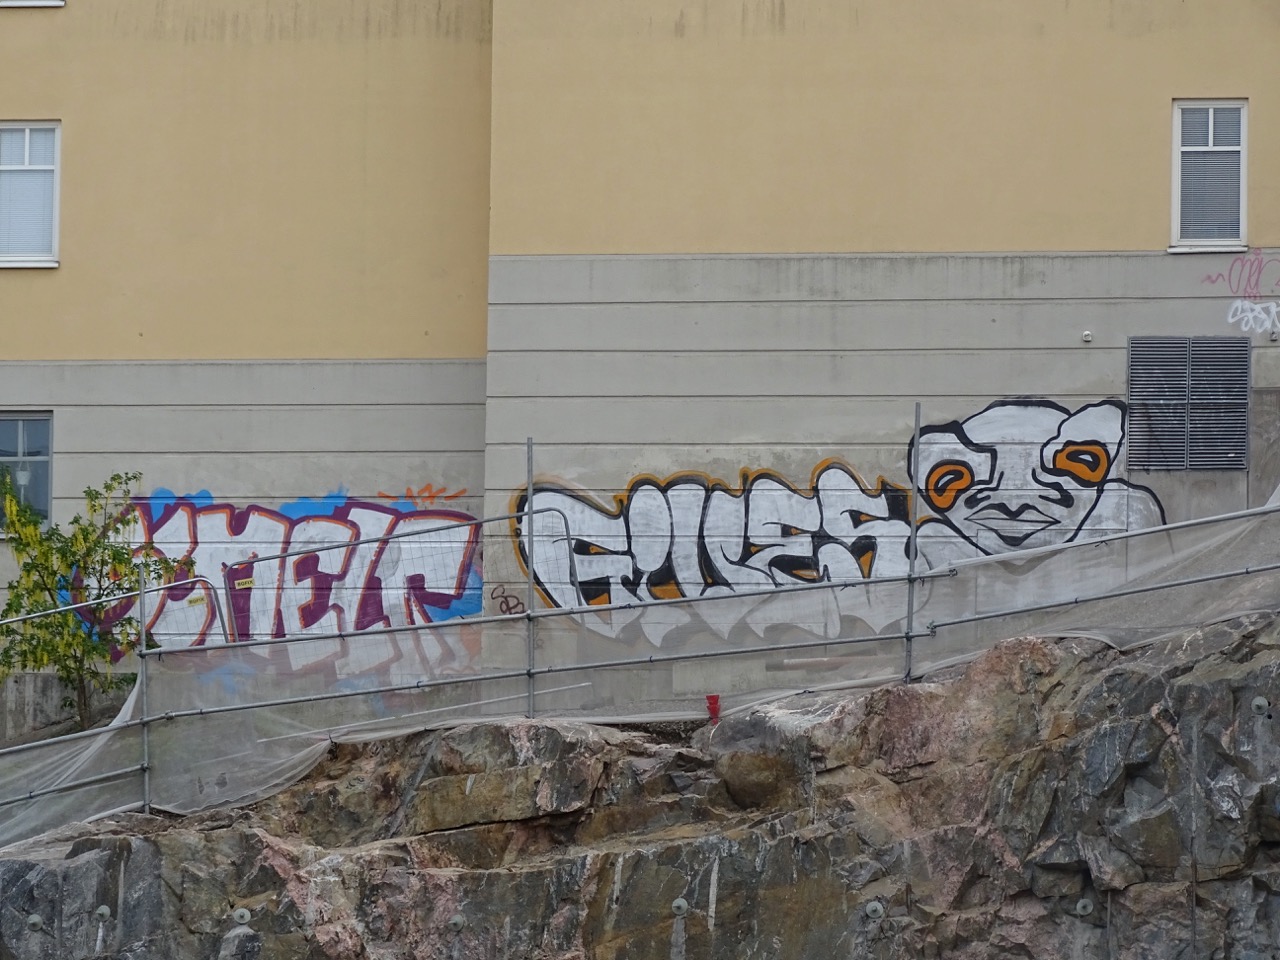 Stockholm street art